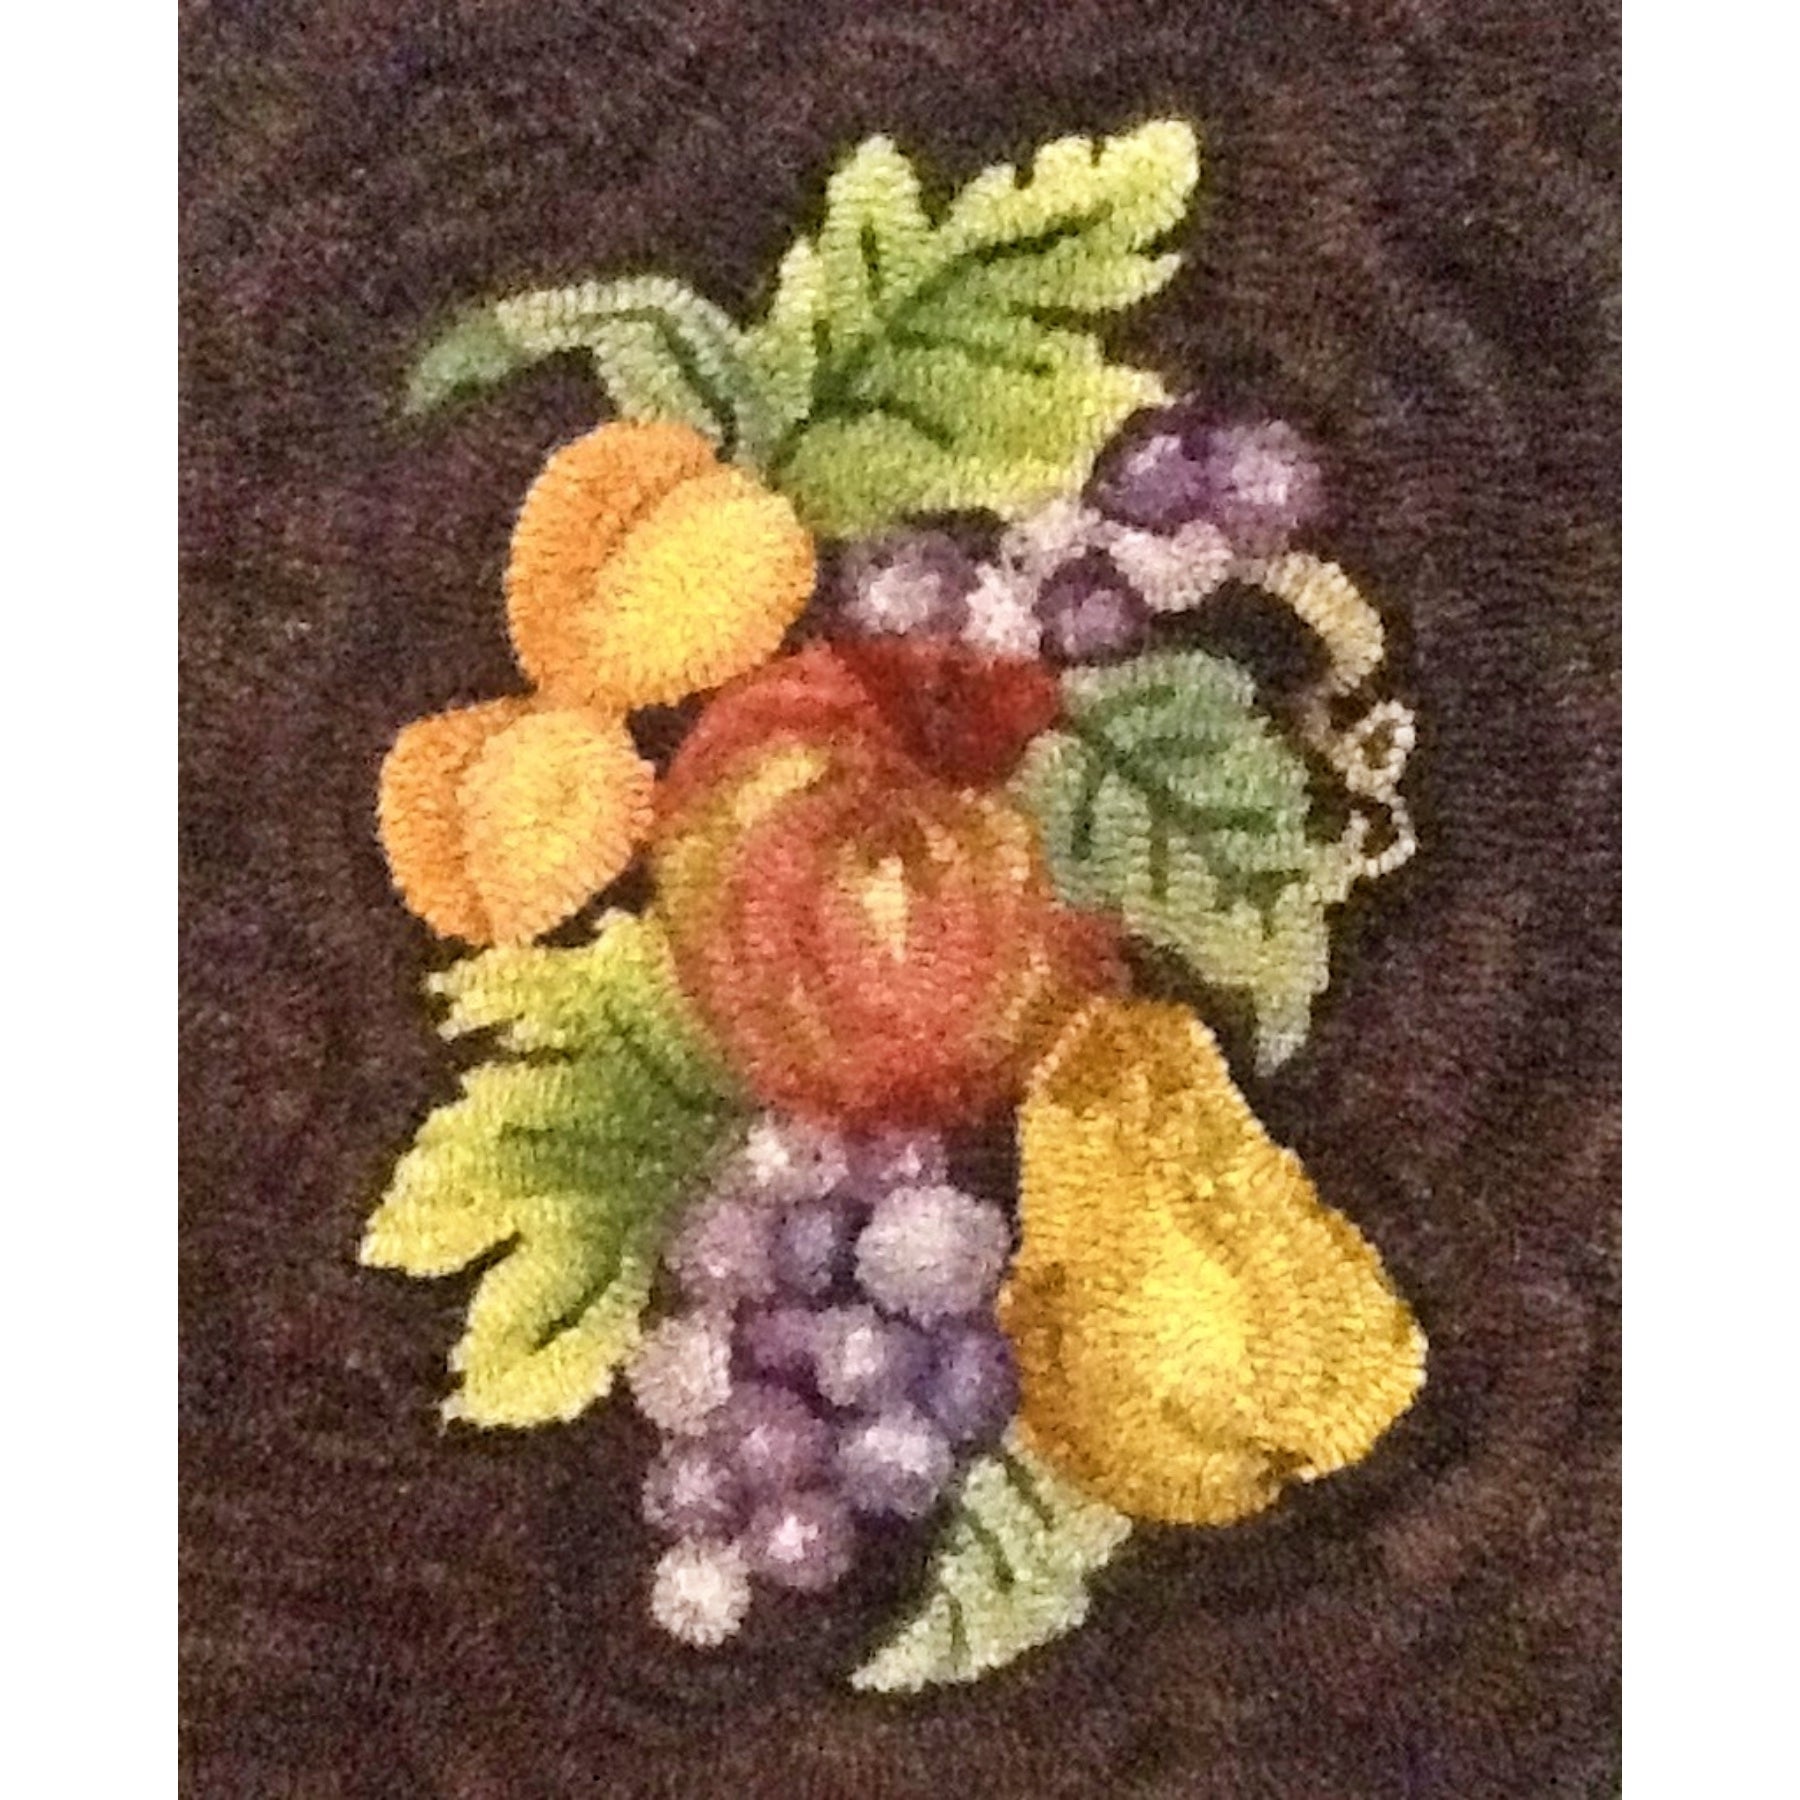 Fruit, rug hooked by Louise Hulbert